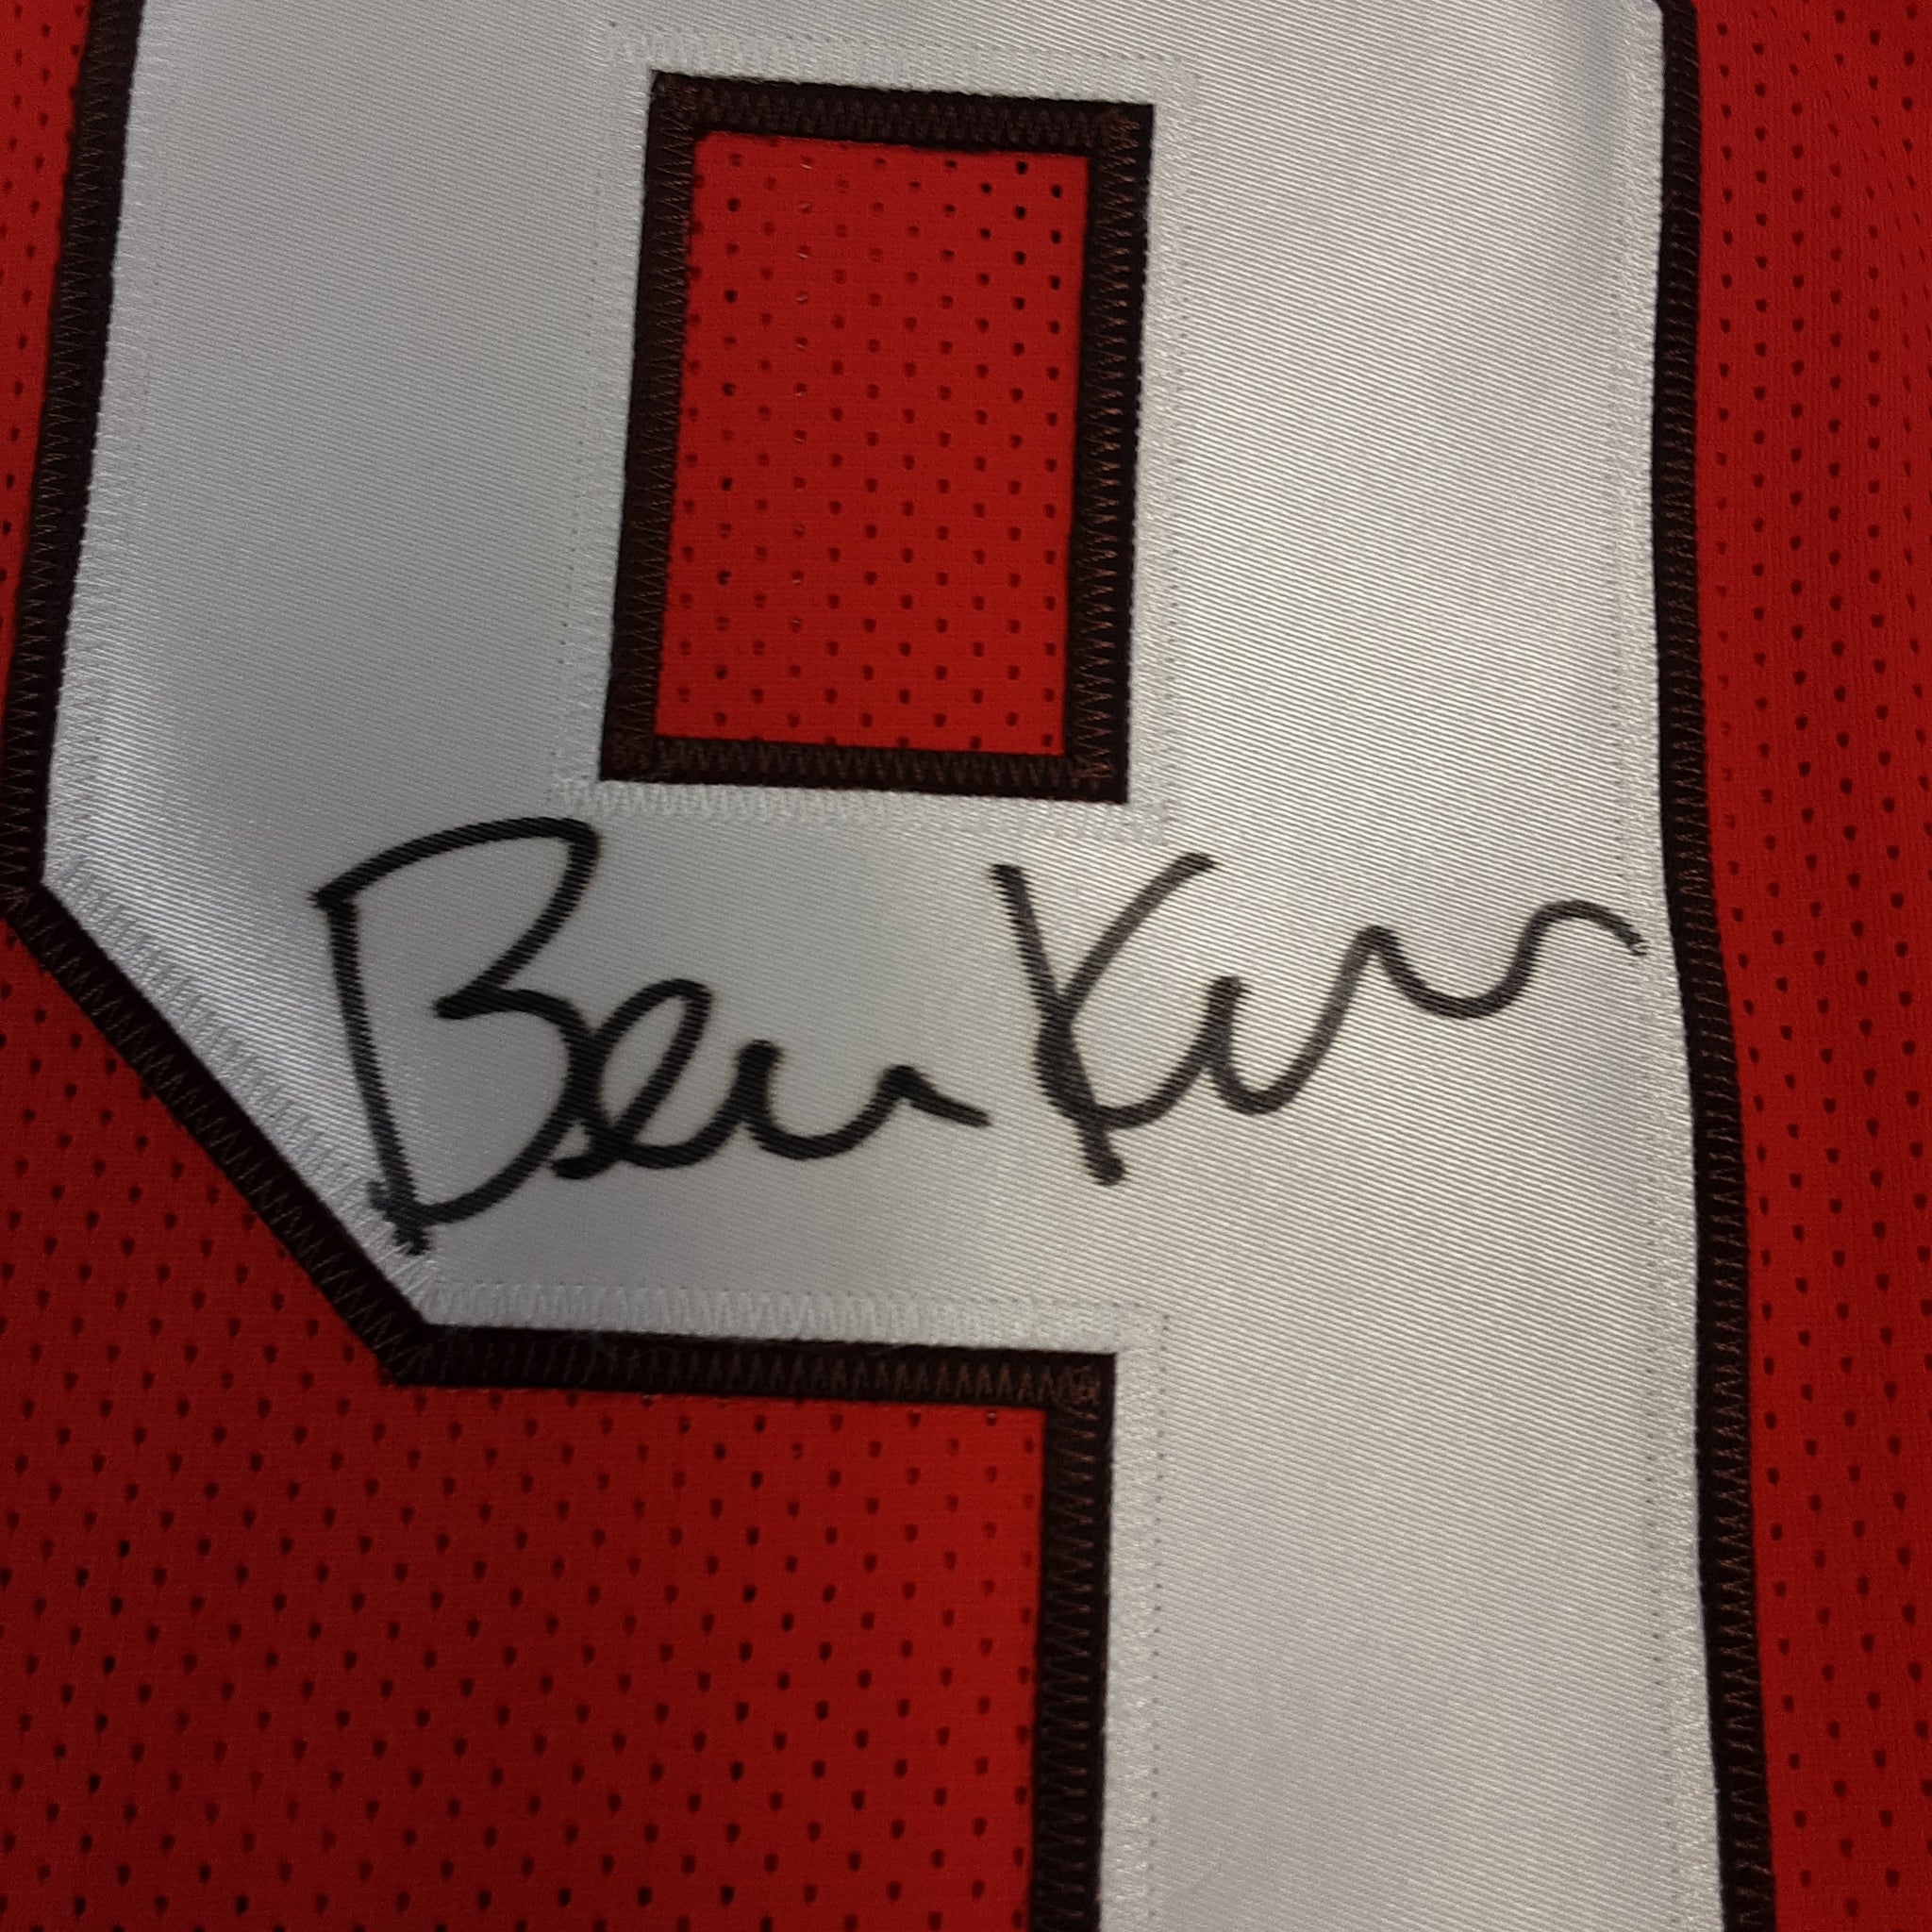 Ernie Banks Authentic Signed Pro Style Jersey Autographed JSA